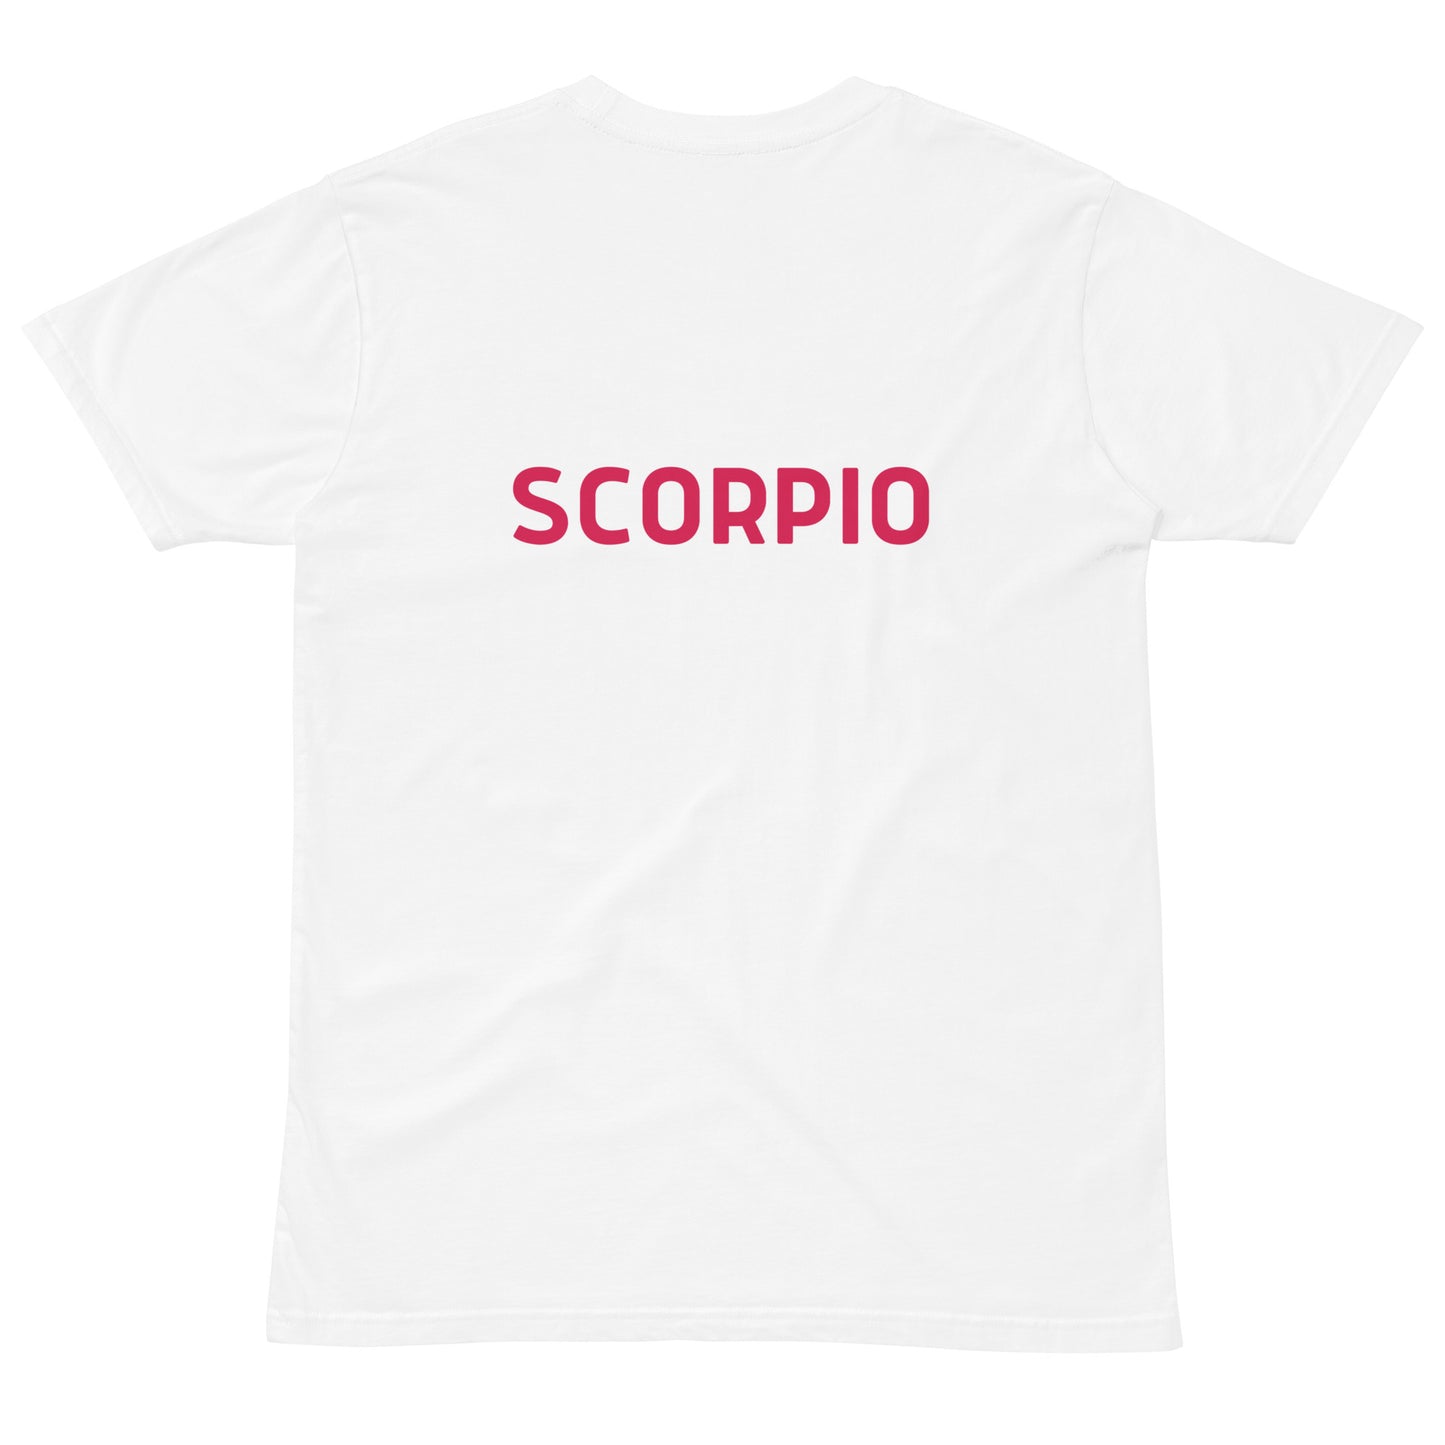 Be the Star You are! Scorpio Unisex premium t-shirt